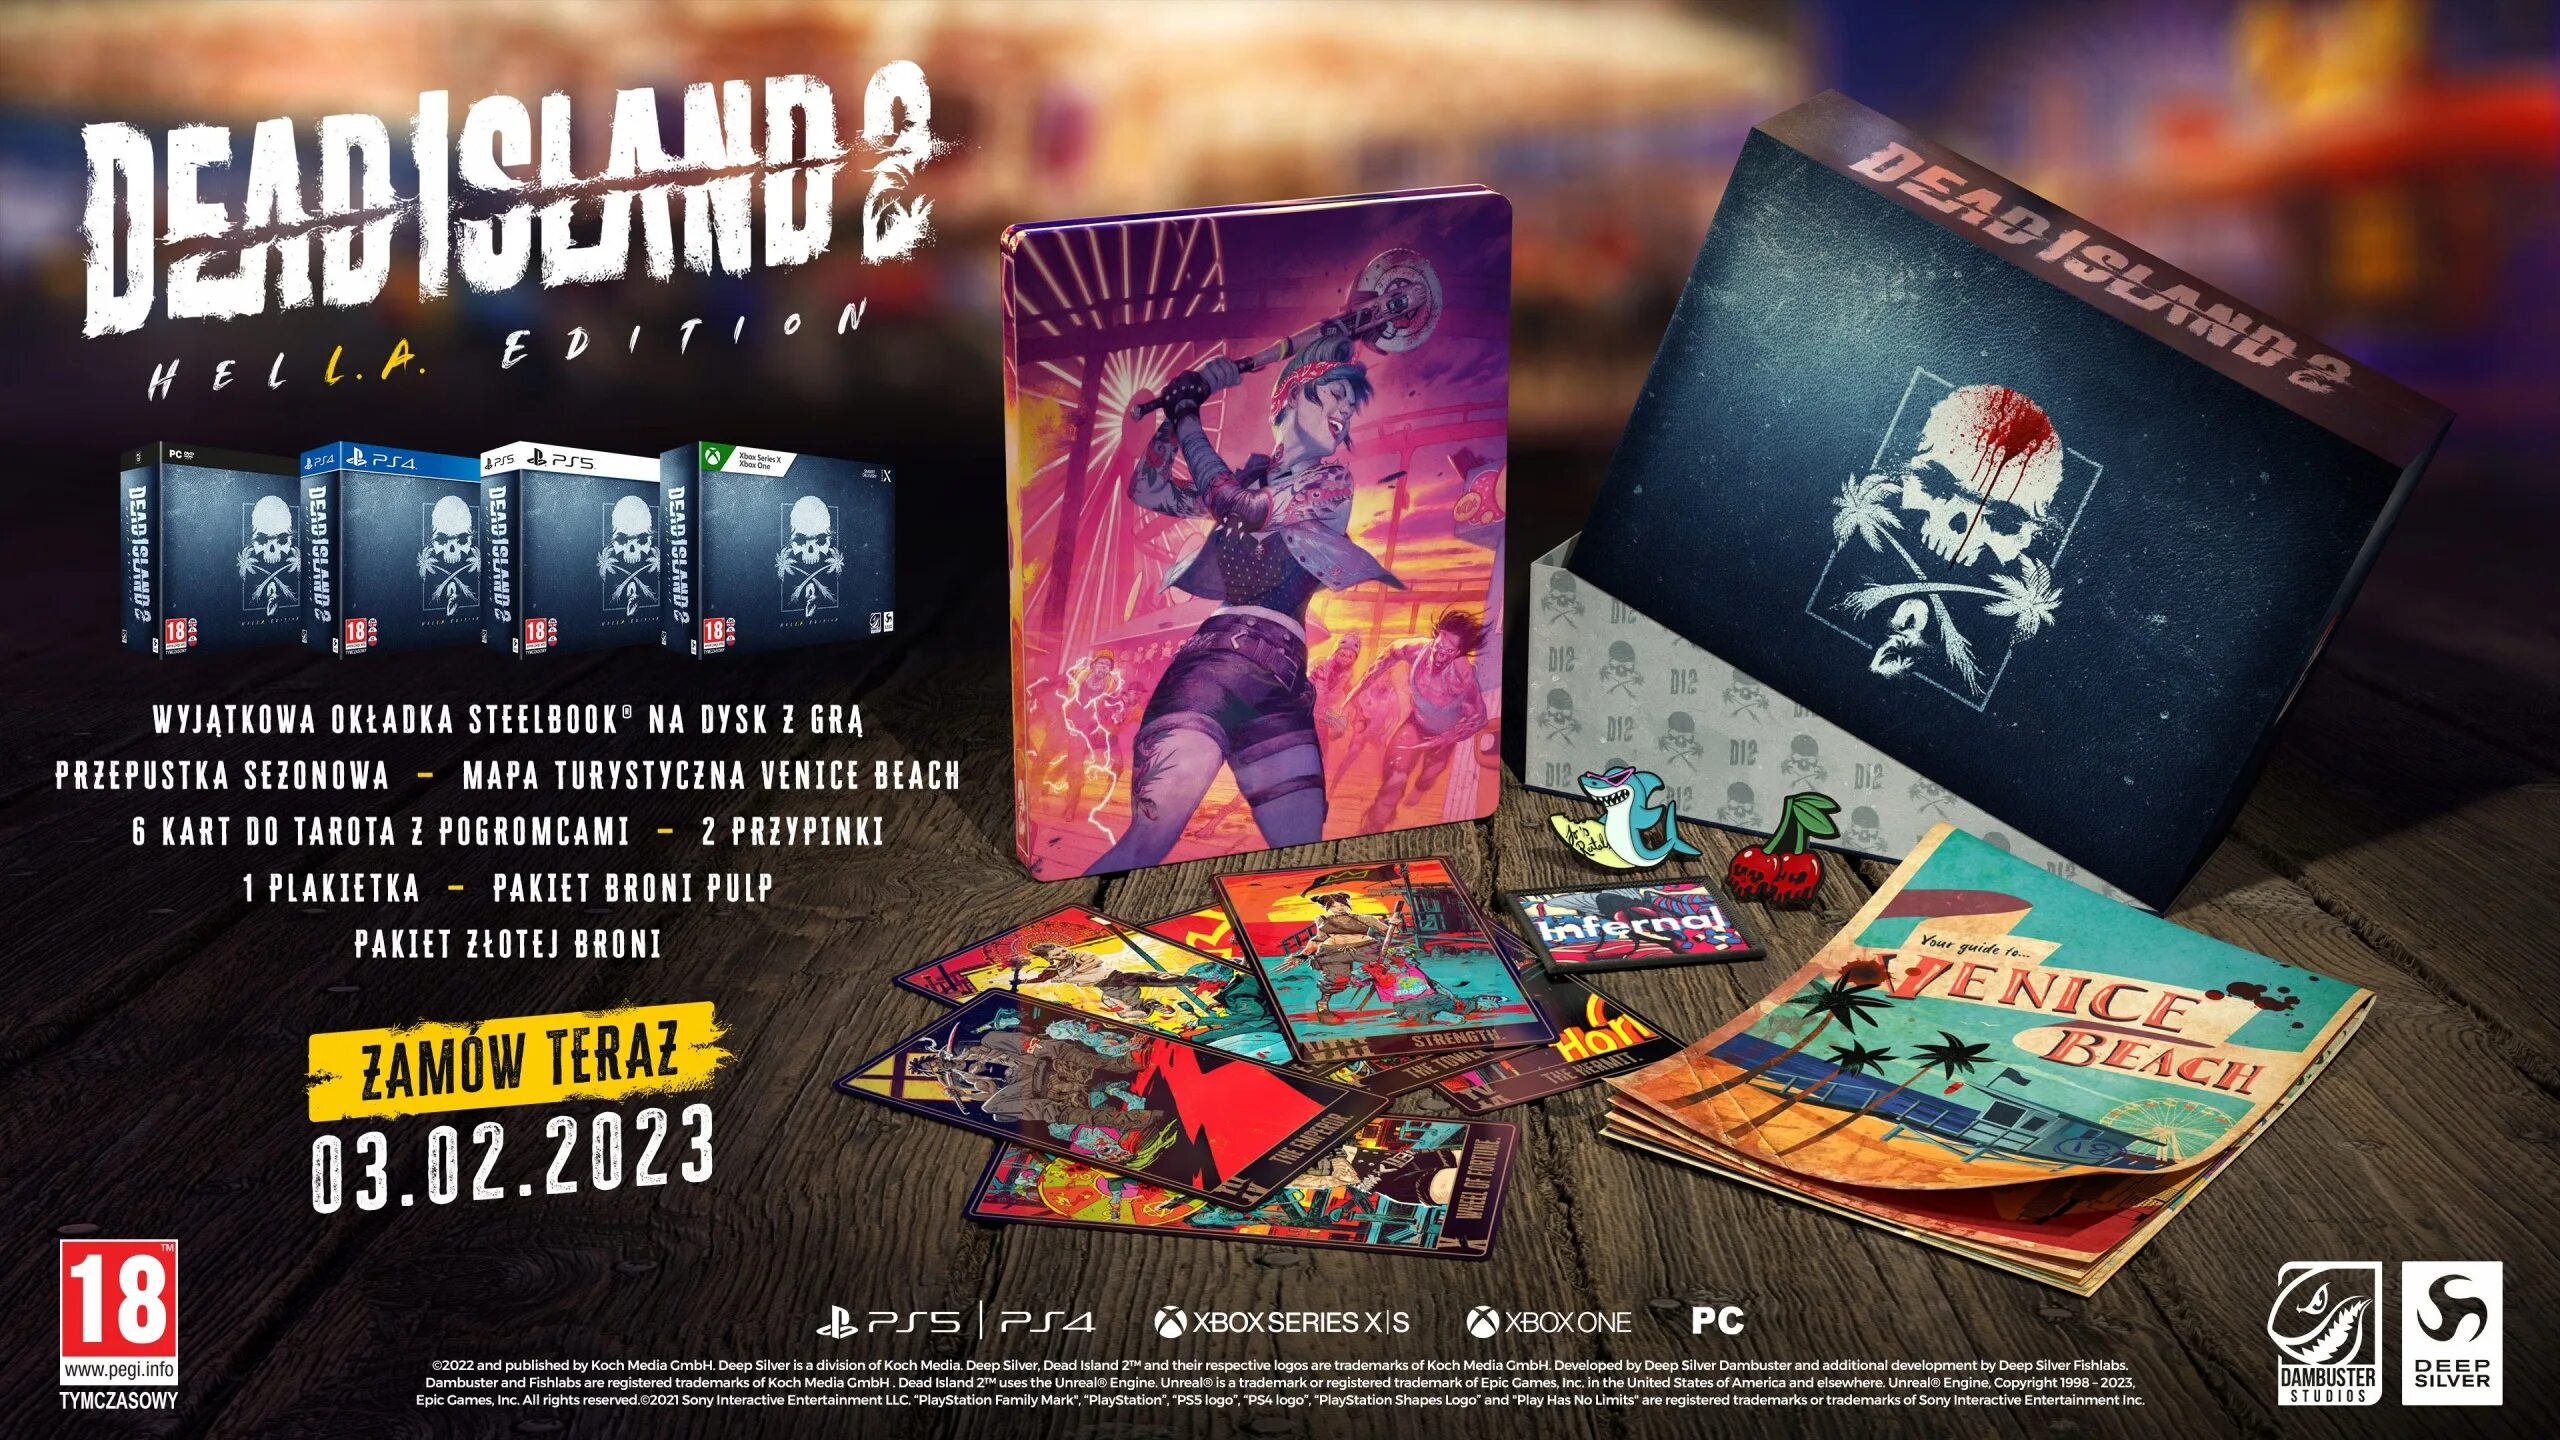 Pulp edition dead island. Dead Island 2 коллекционное издание. Коллекционное издание дед Айленд 2. Коллекционка дед Айланд 2.